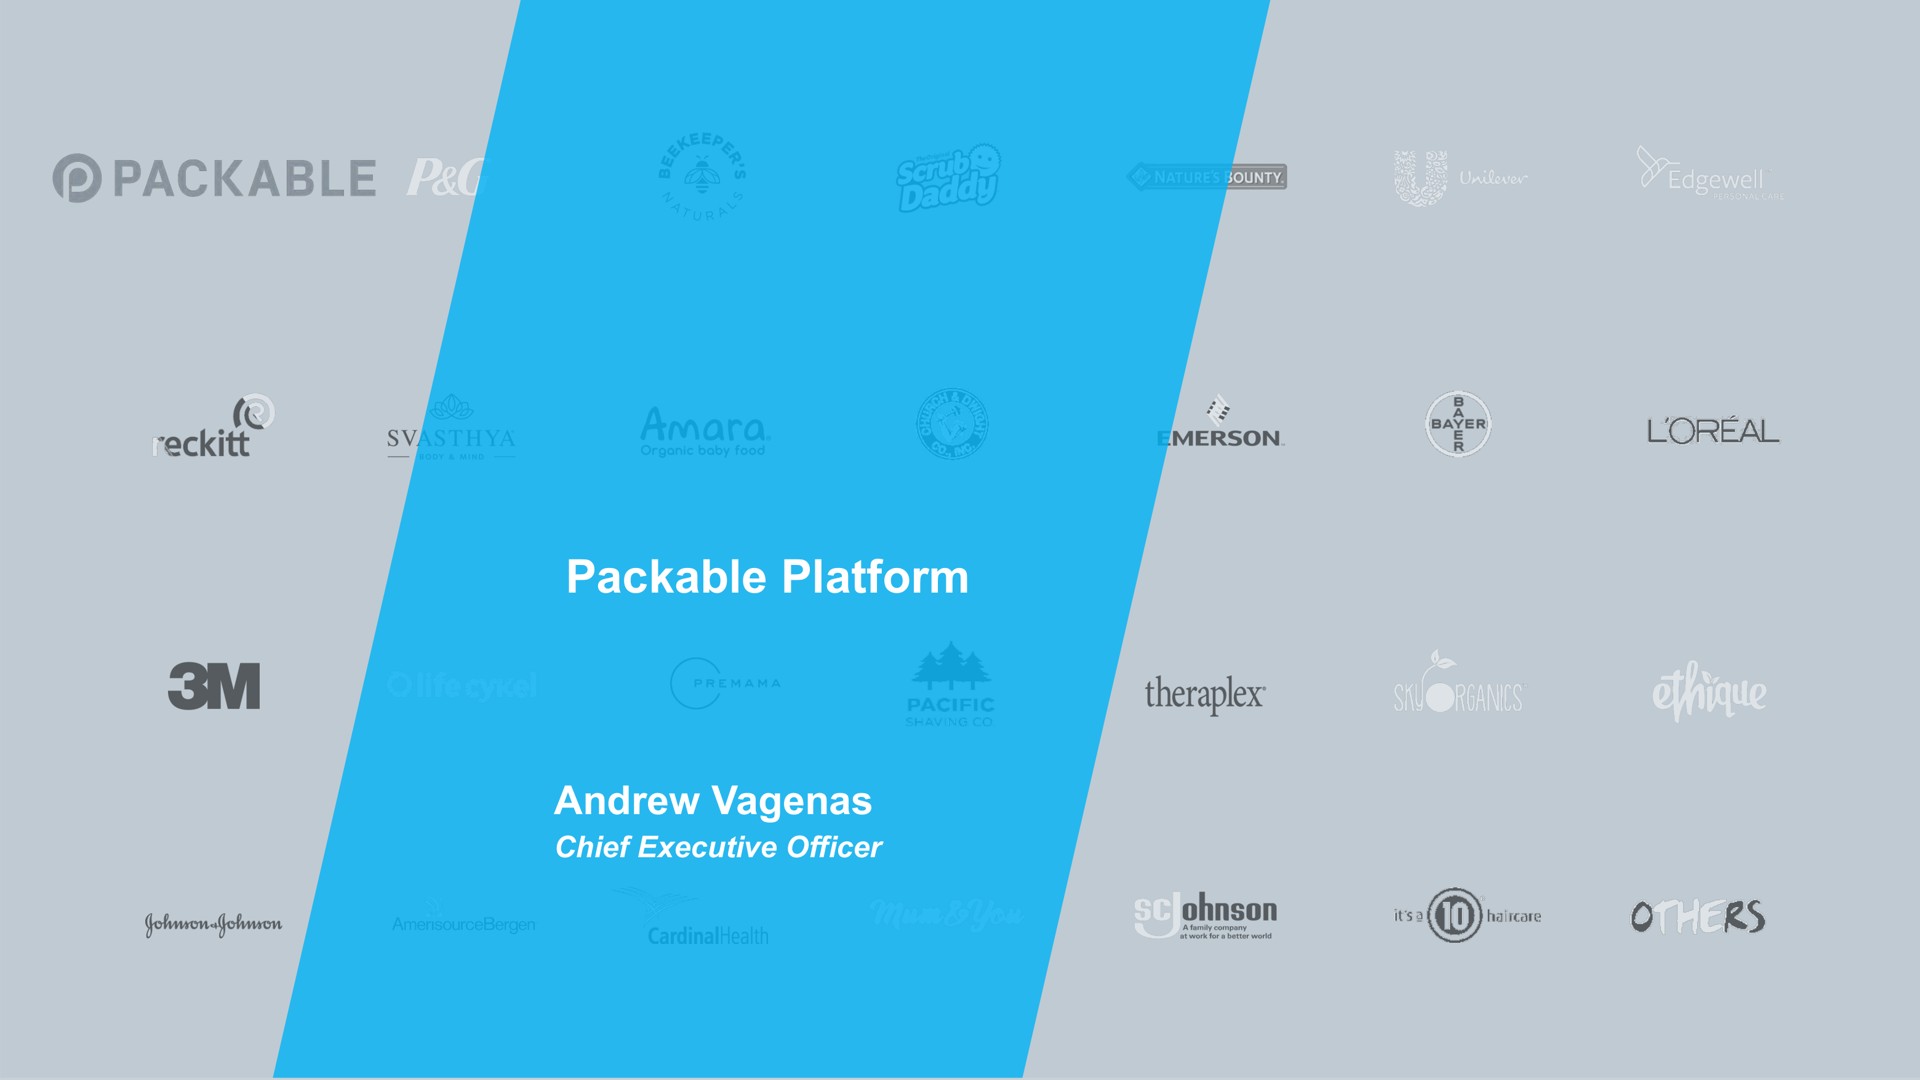 packable platform gan | Packable